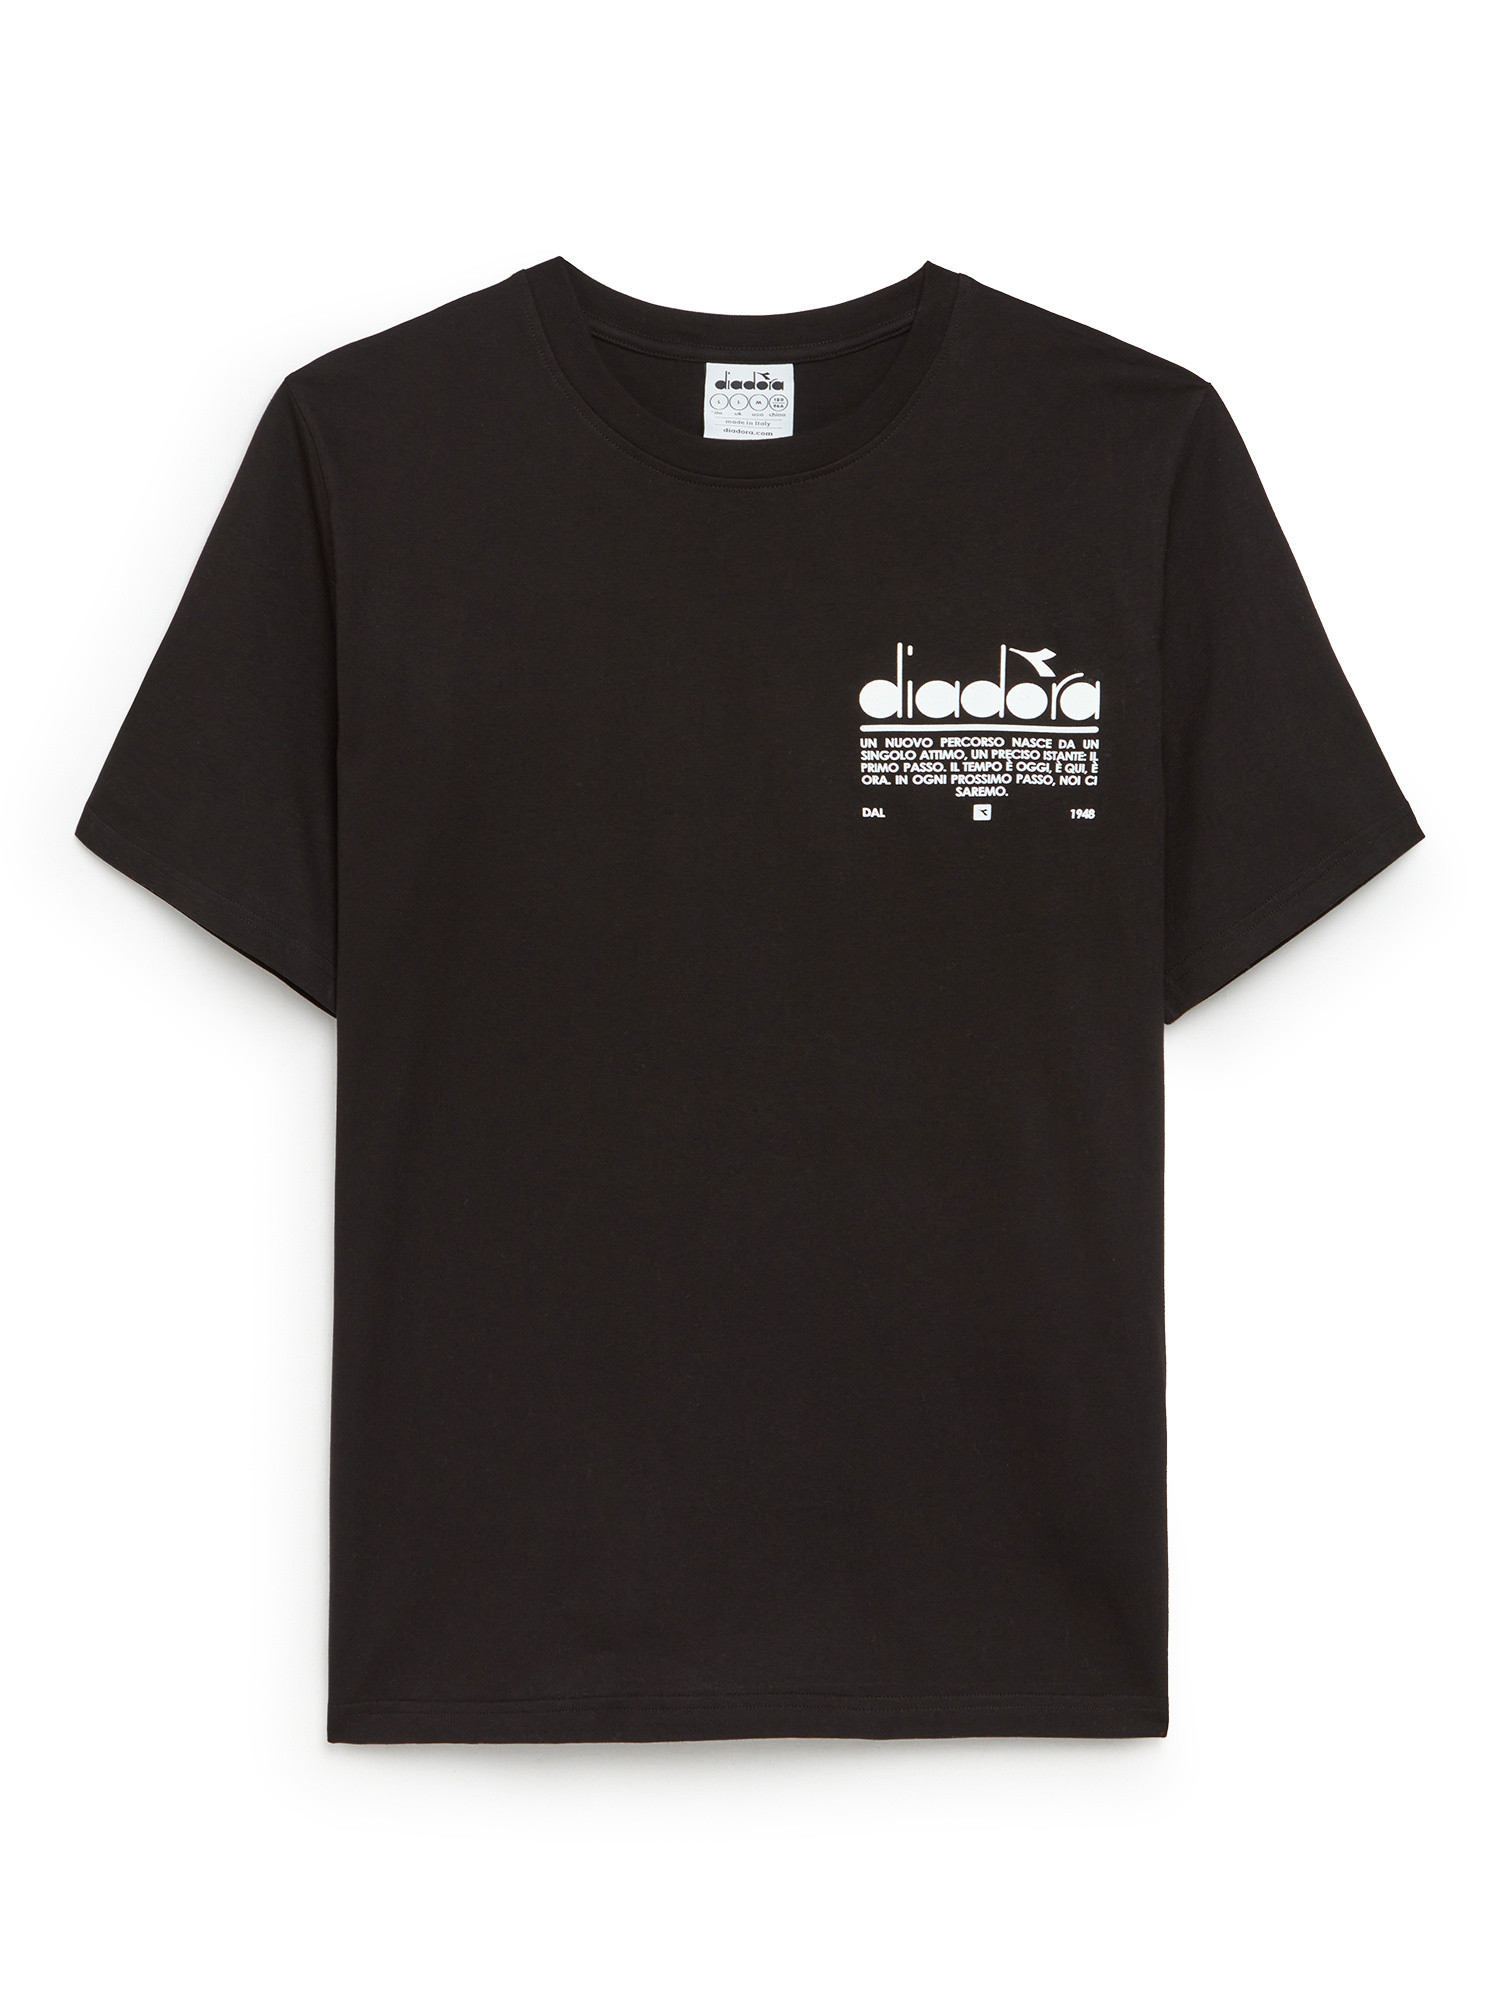 Diadora - T-shirt girocollo Manifesto in cotone, Nero, large image number 0